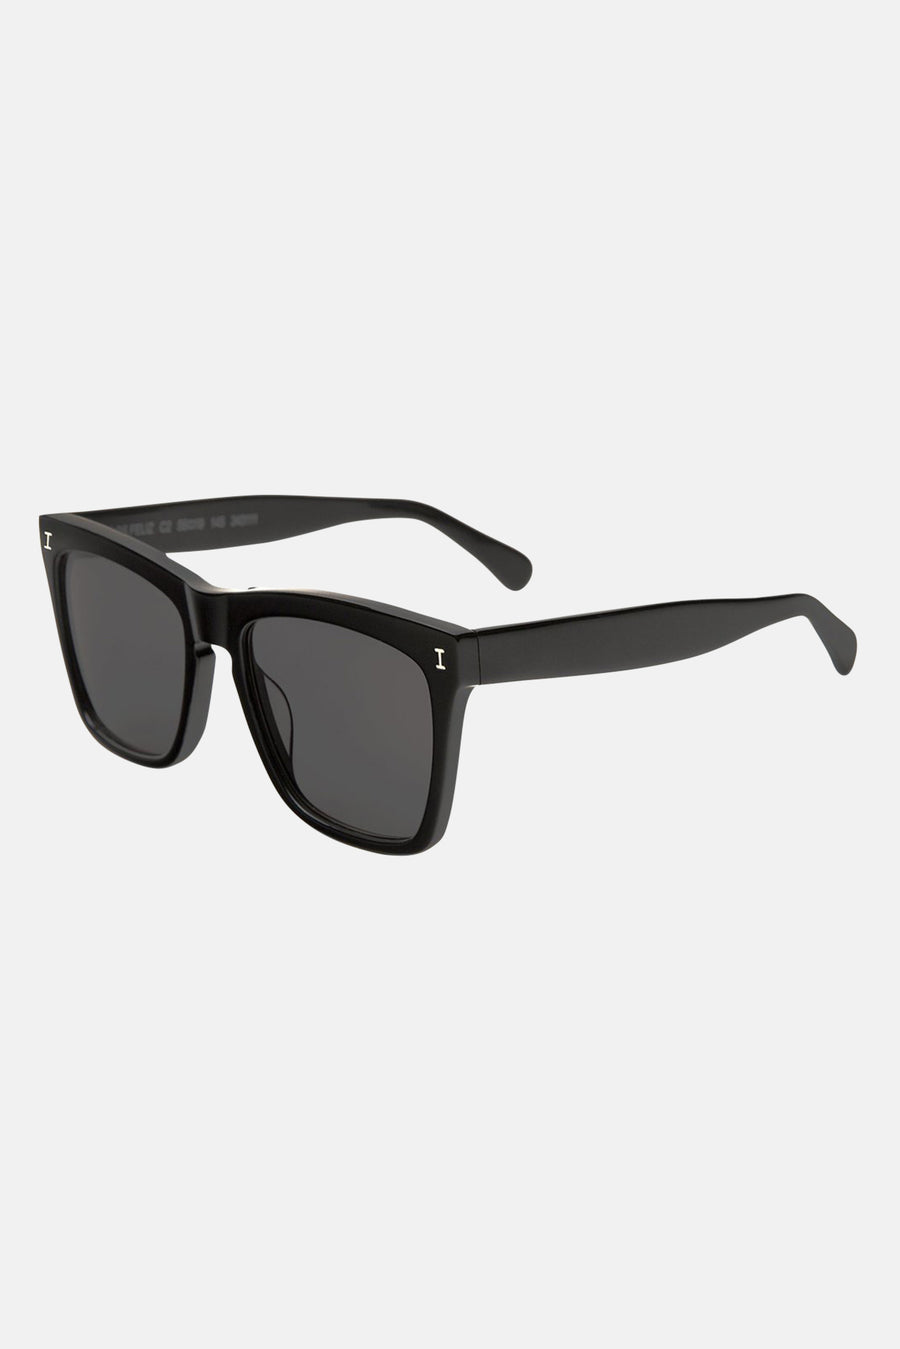 Los Feliz Sunglasses Black/Grey - blueandcream